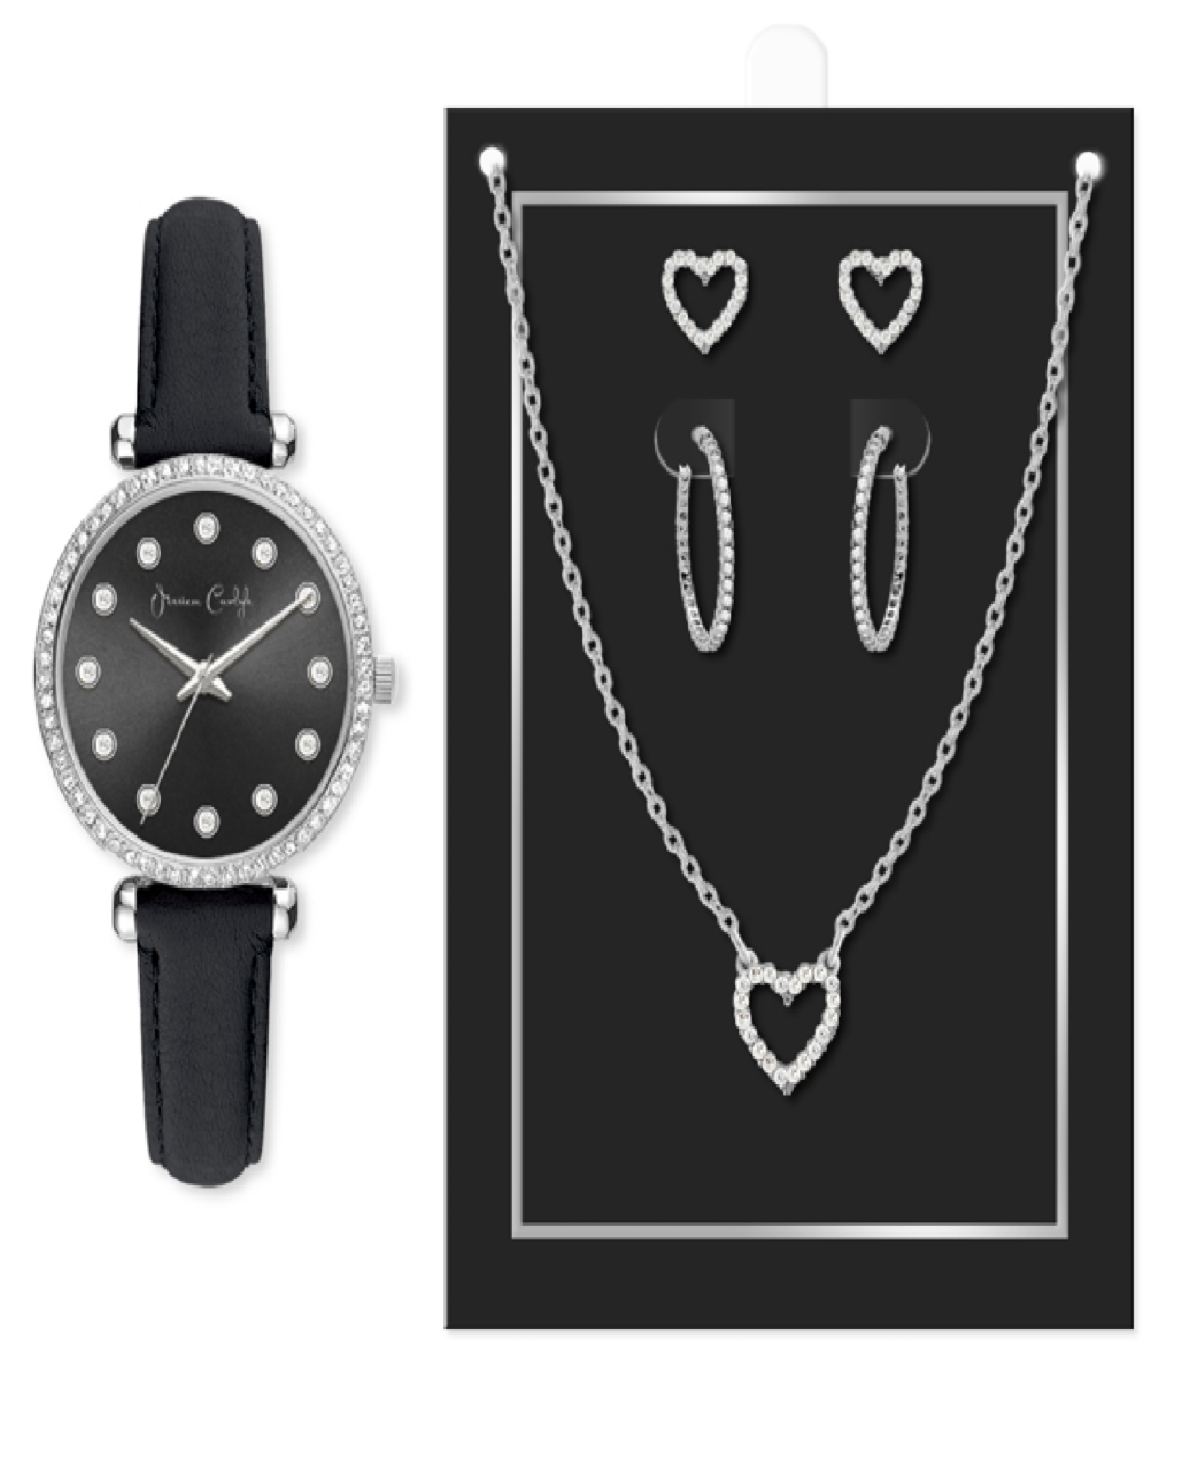 Women's Quartz Black Polyurethane Leather Watch 33mm and 2 Piece Set - Black, Gun Sunray